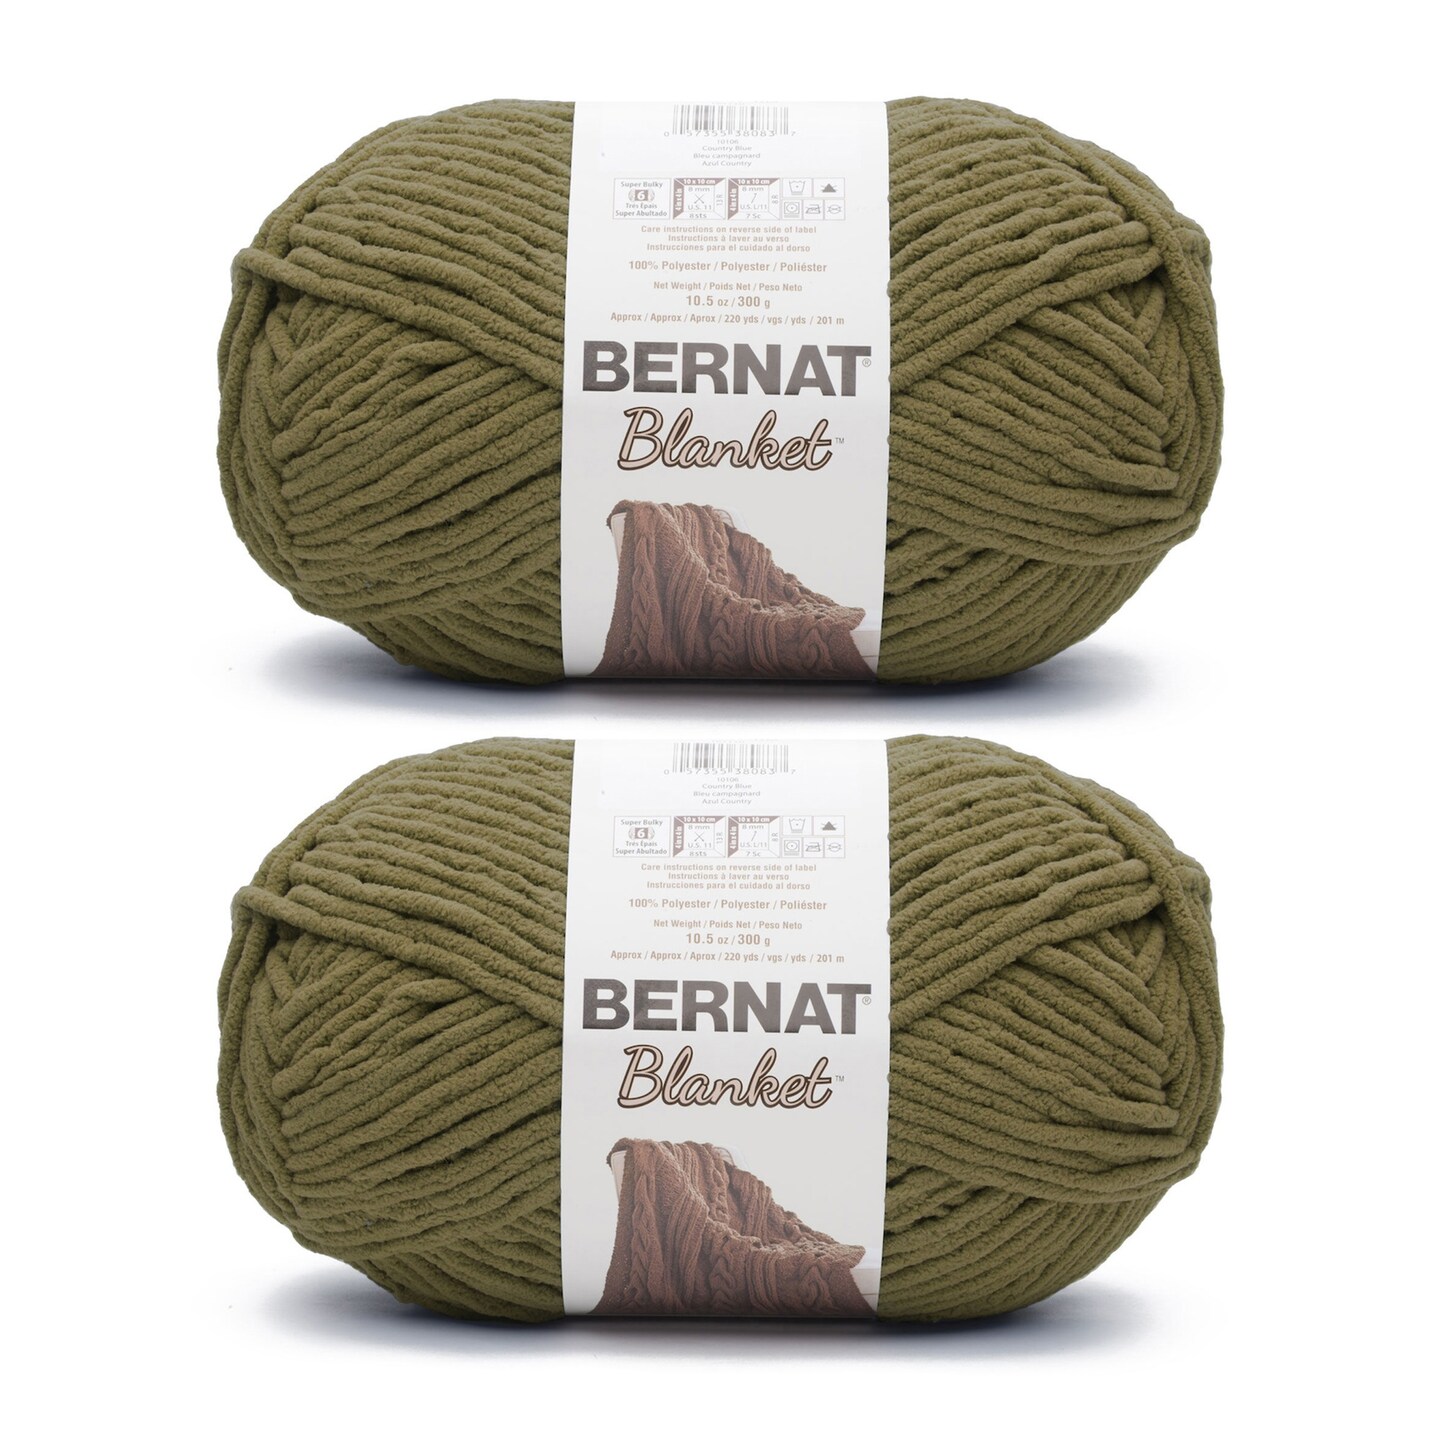 Bernat Blanket Olive Yarn - 2 Pack of 300g/10.5oz - Polyester - 6